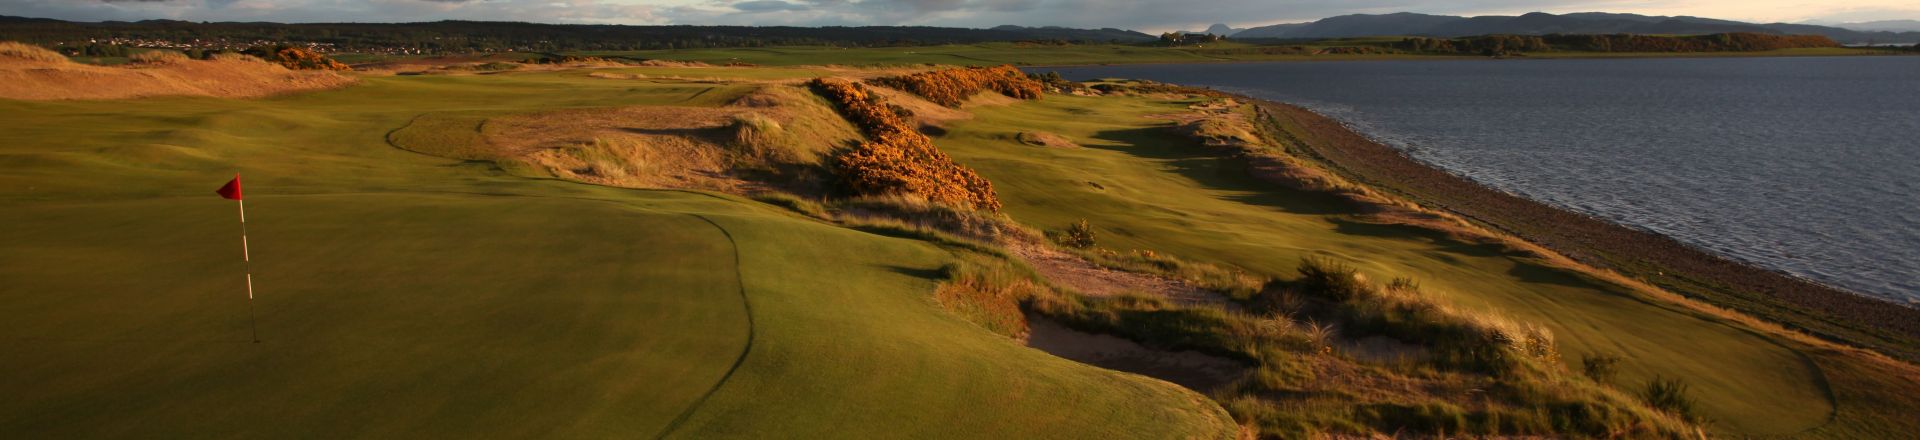 UK Links Golf Tours at Castle Stuart Golf Club in Scotland